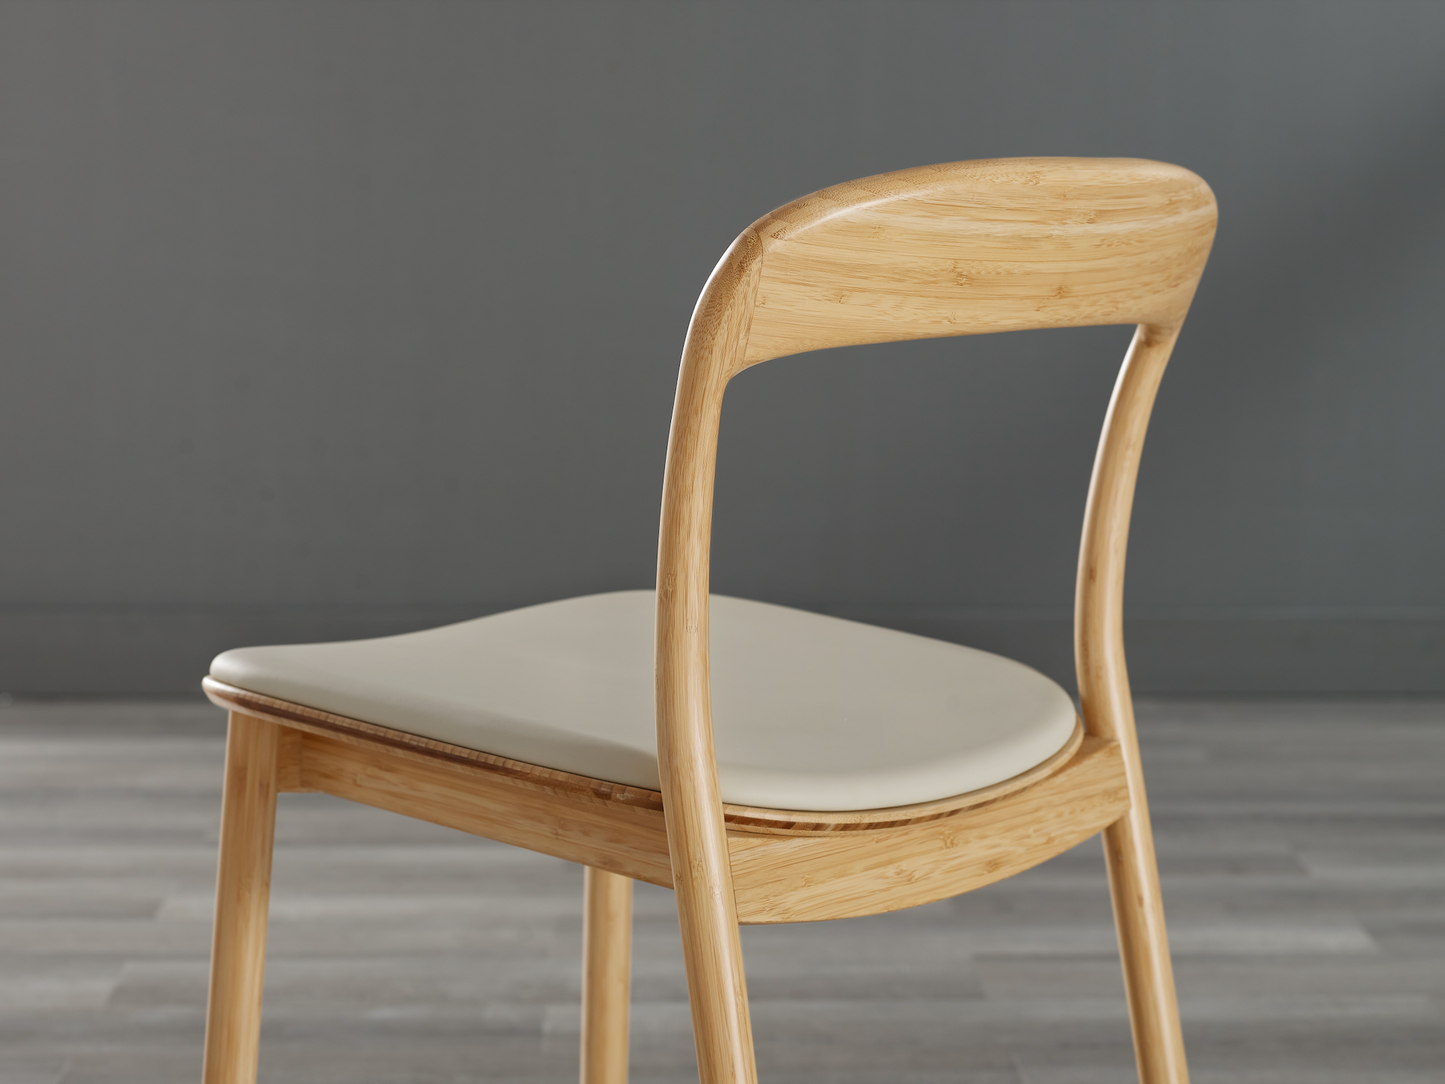 Greenington Hanna Modern Dining Chair Leather Seat (Set of 2)